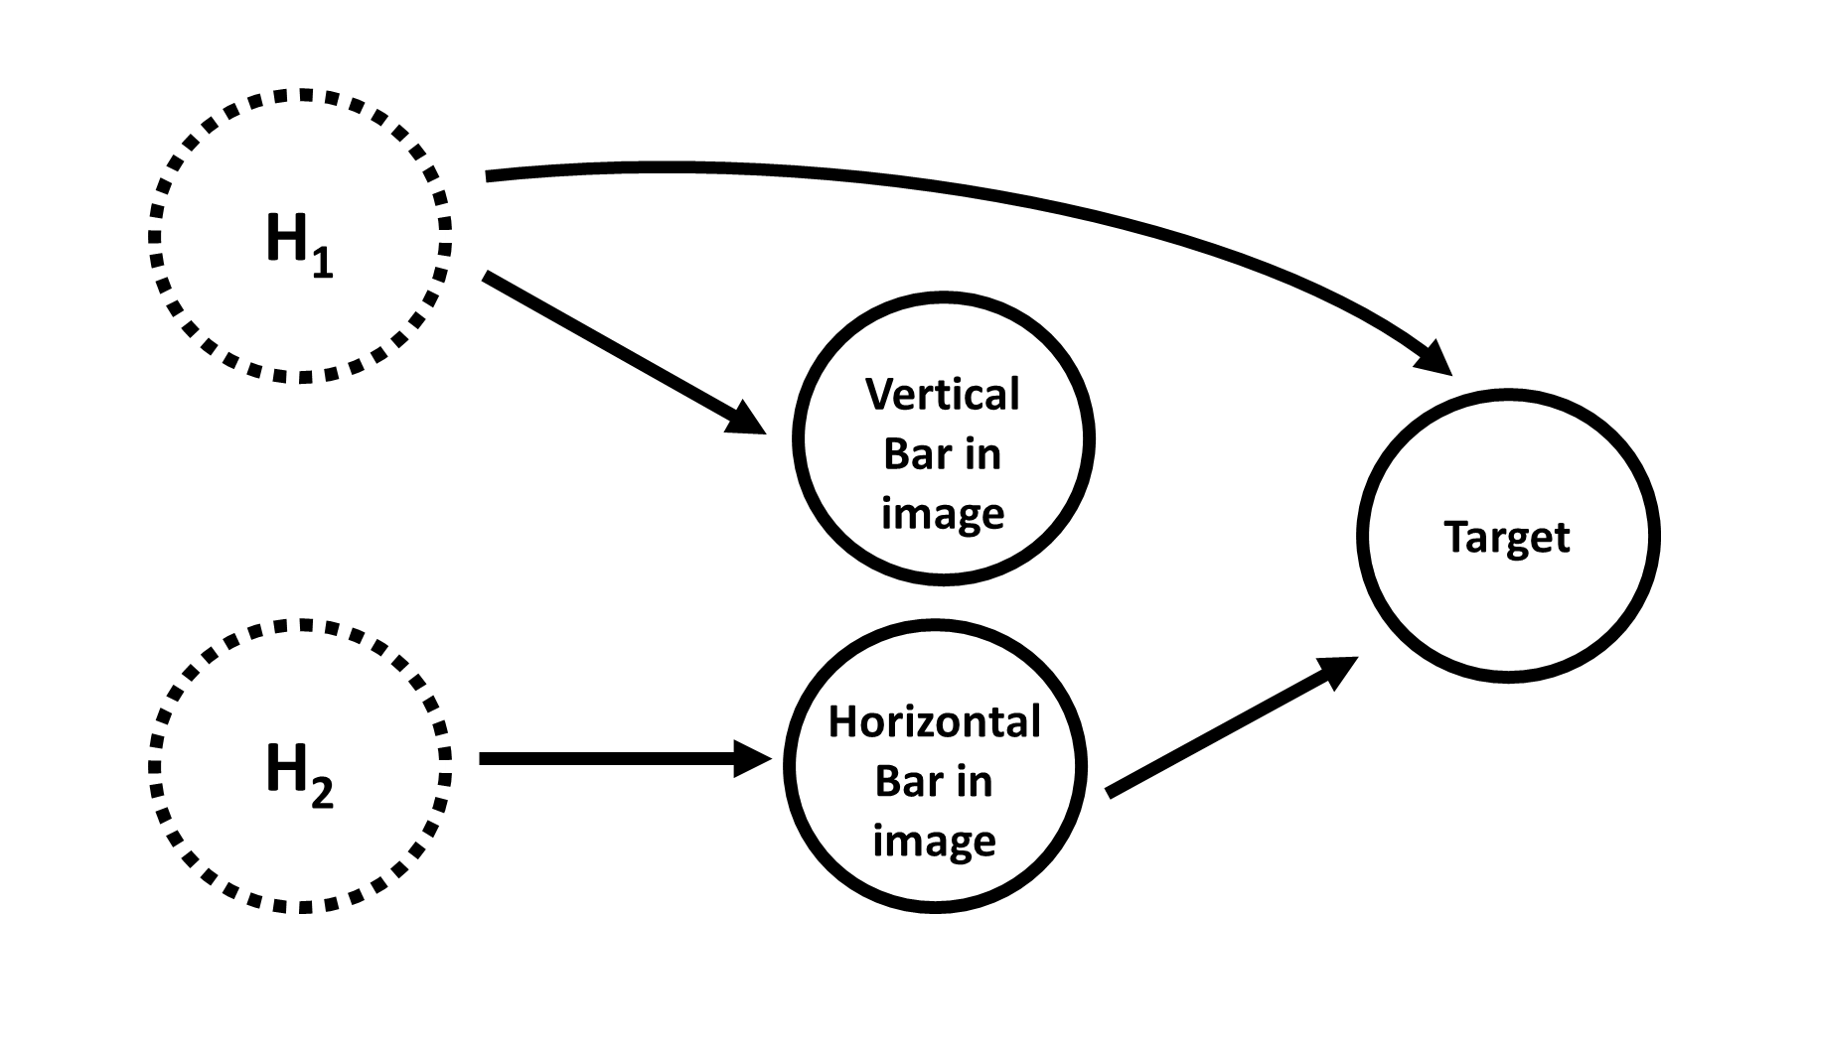 causal graph for visual bars